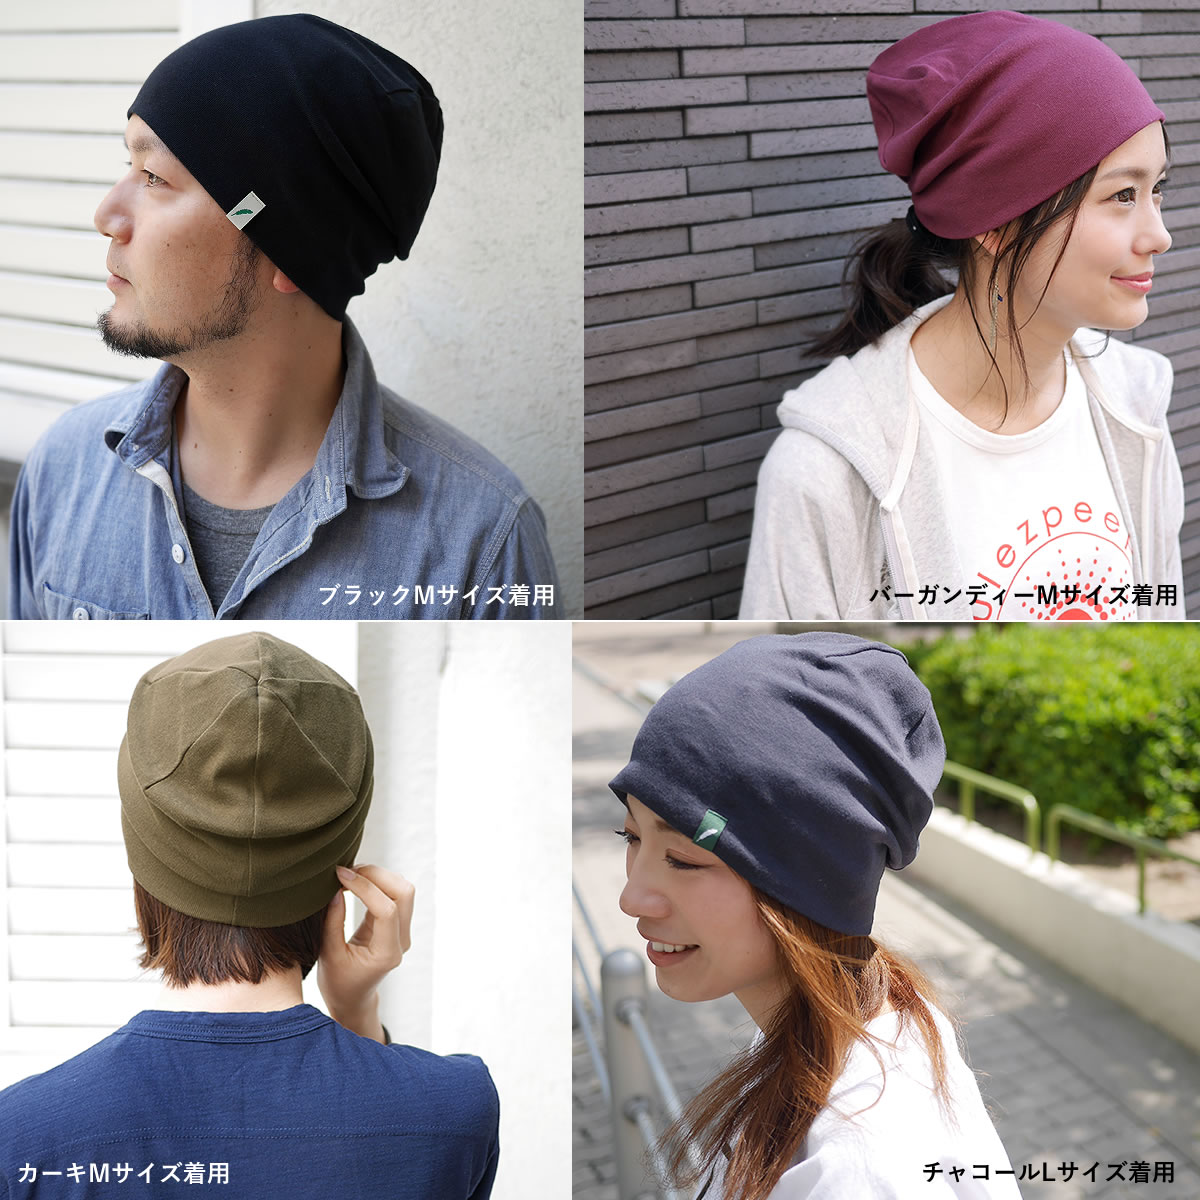 nakota ナコタ オーガニックコットン ワッチキャップ 帽子 ニット帽 日本製 メンズ レディース キッズ 大きいサイズ サマーニット